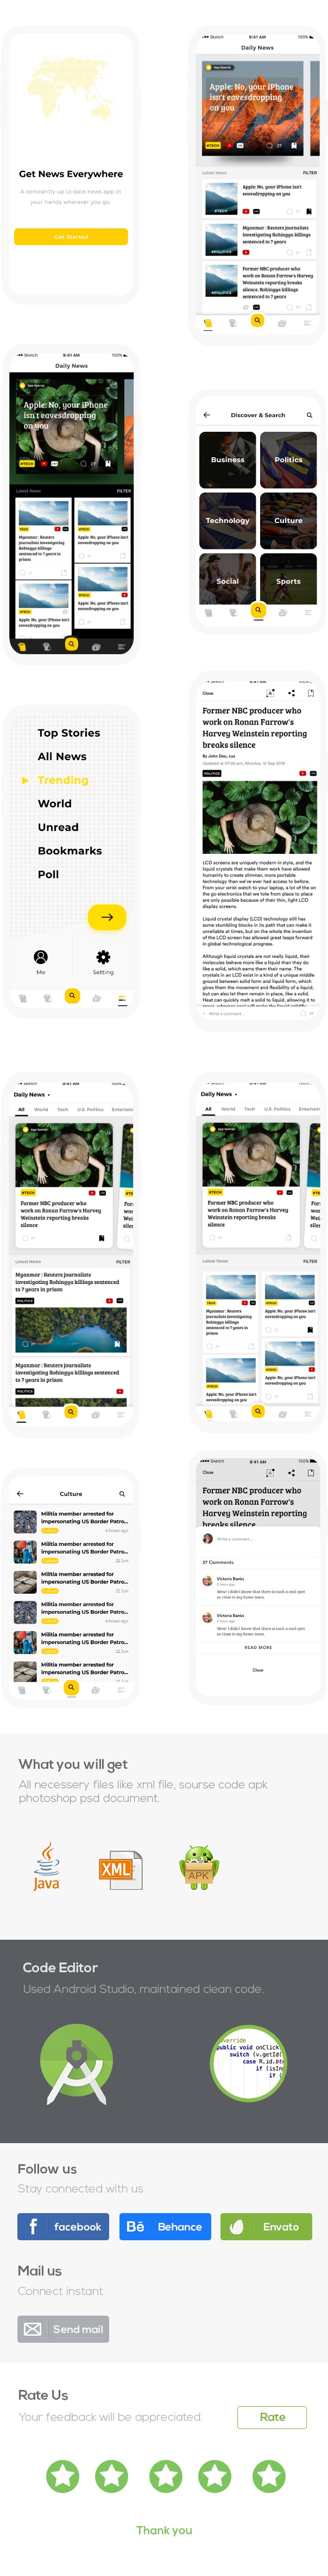 NewsApp - News & Blog Android App Template - 1